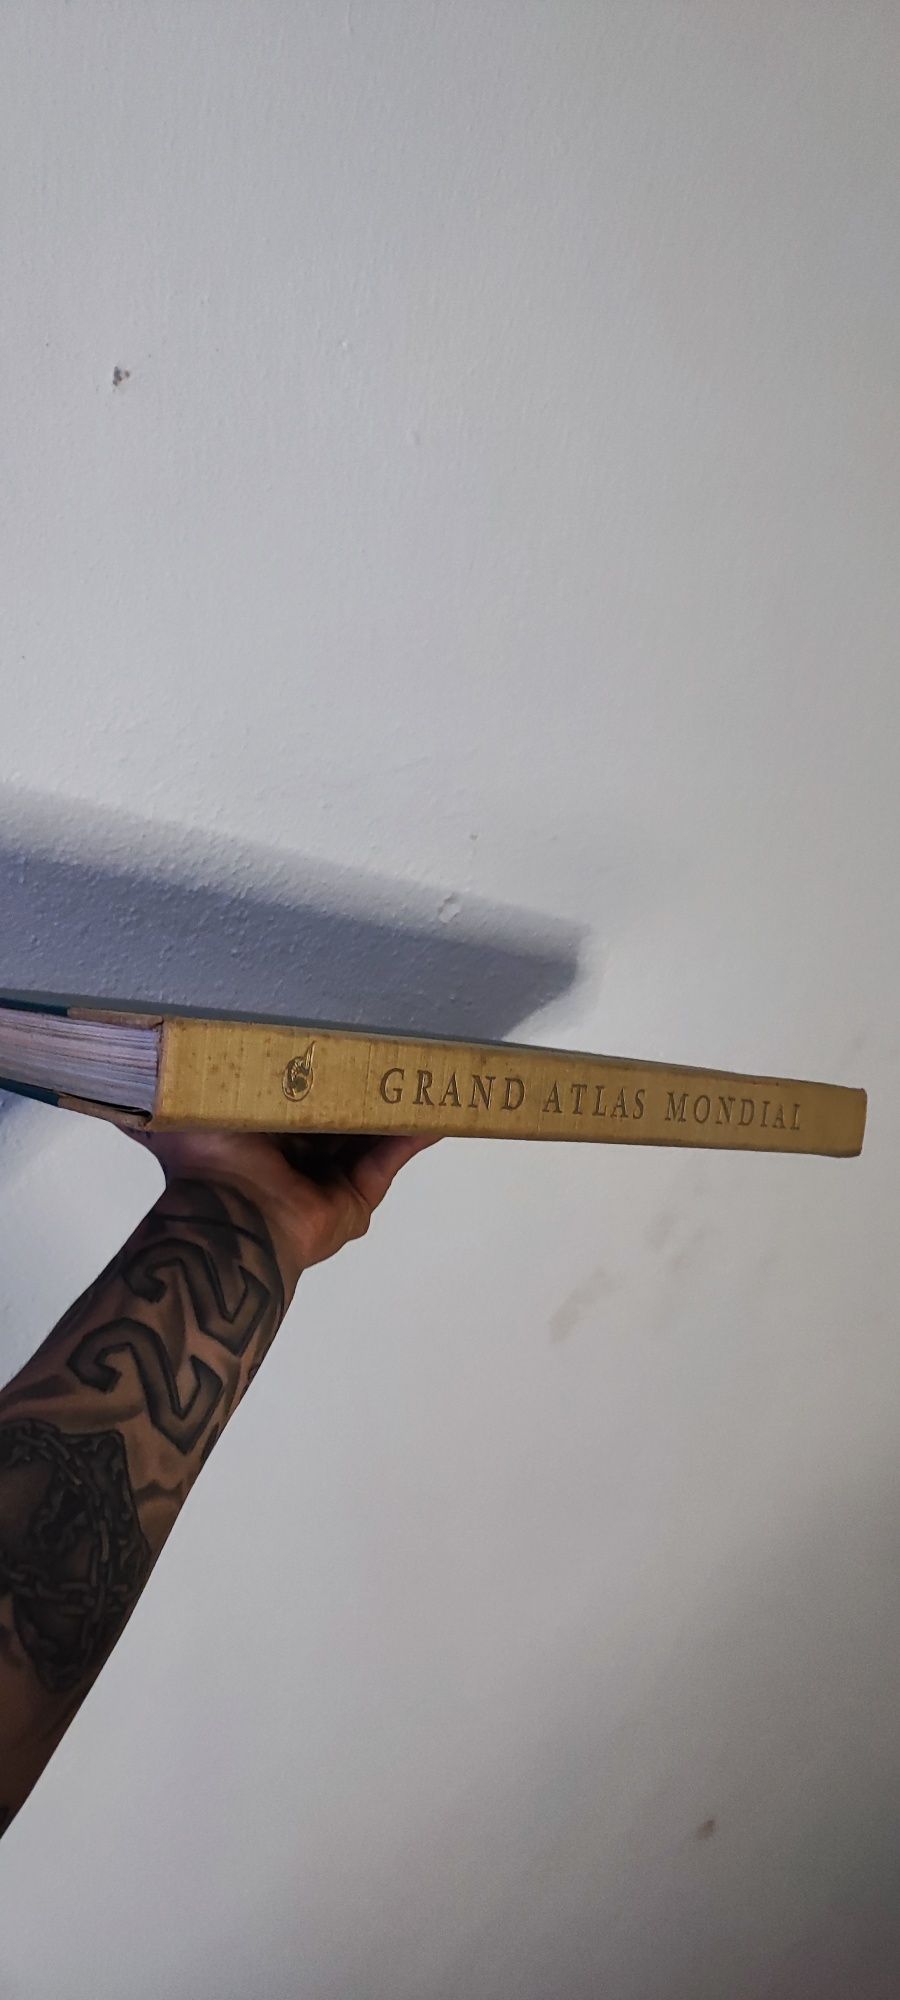 Grand Atlas Mondial - Selection du Reader's Digest